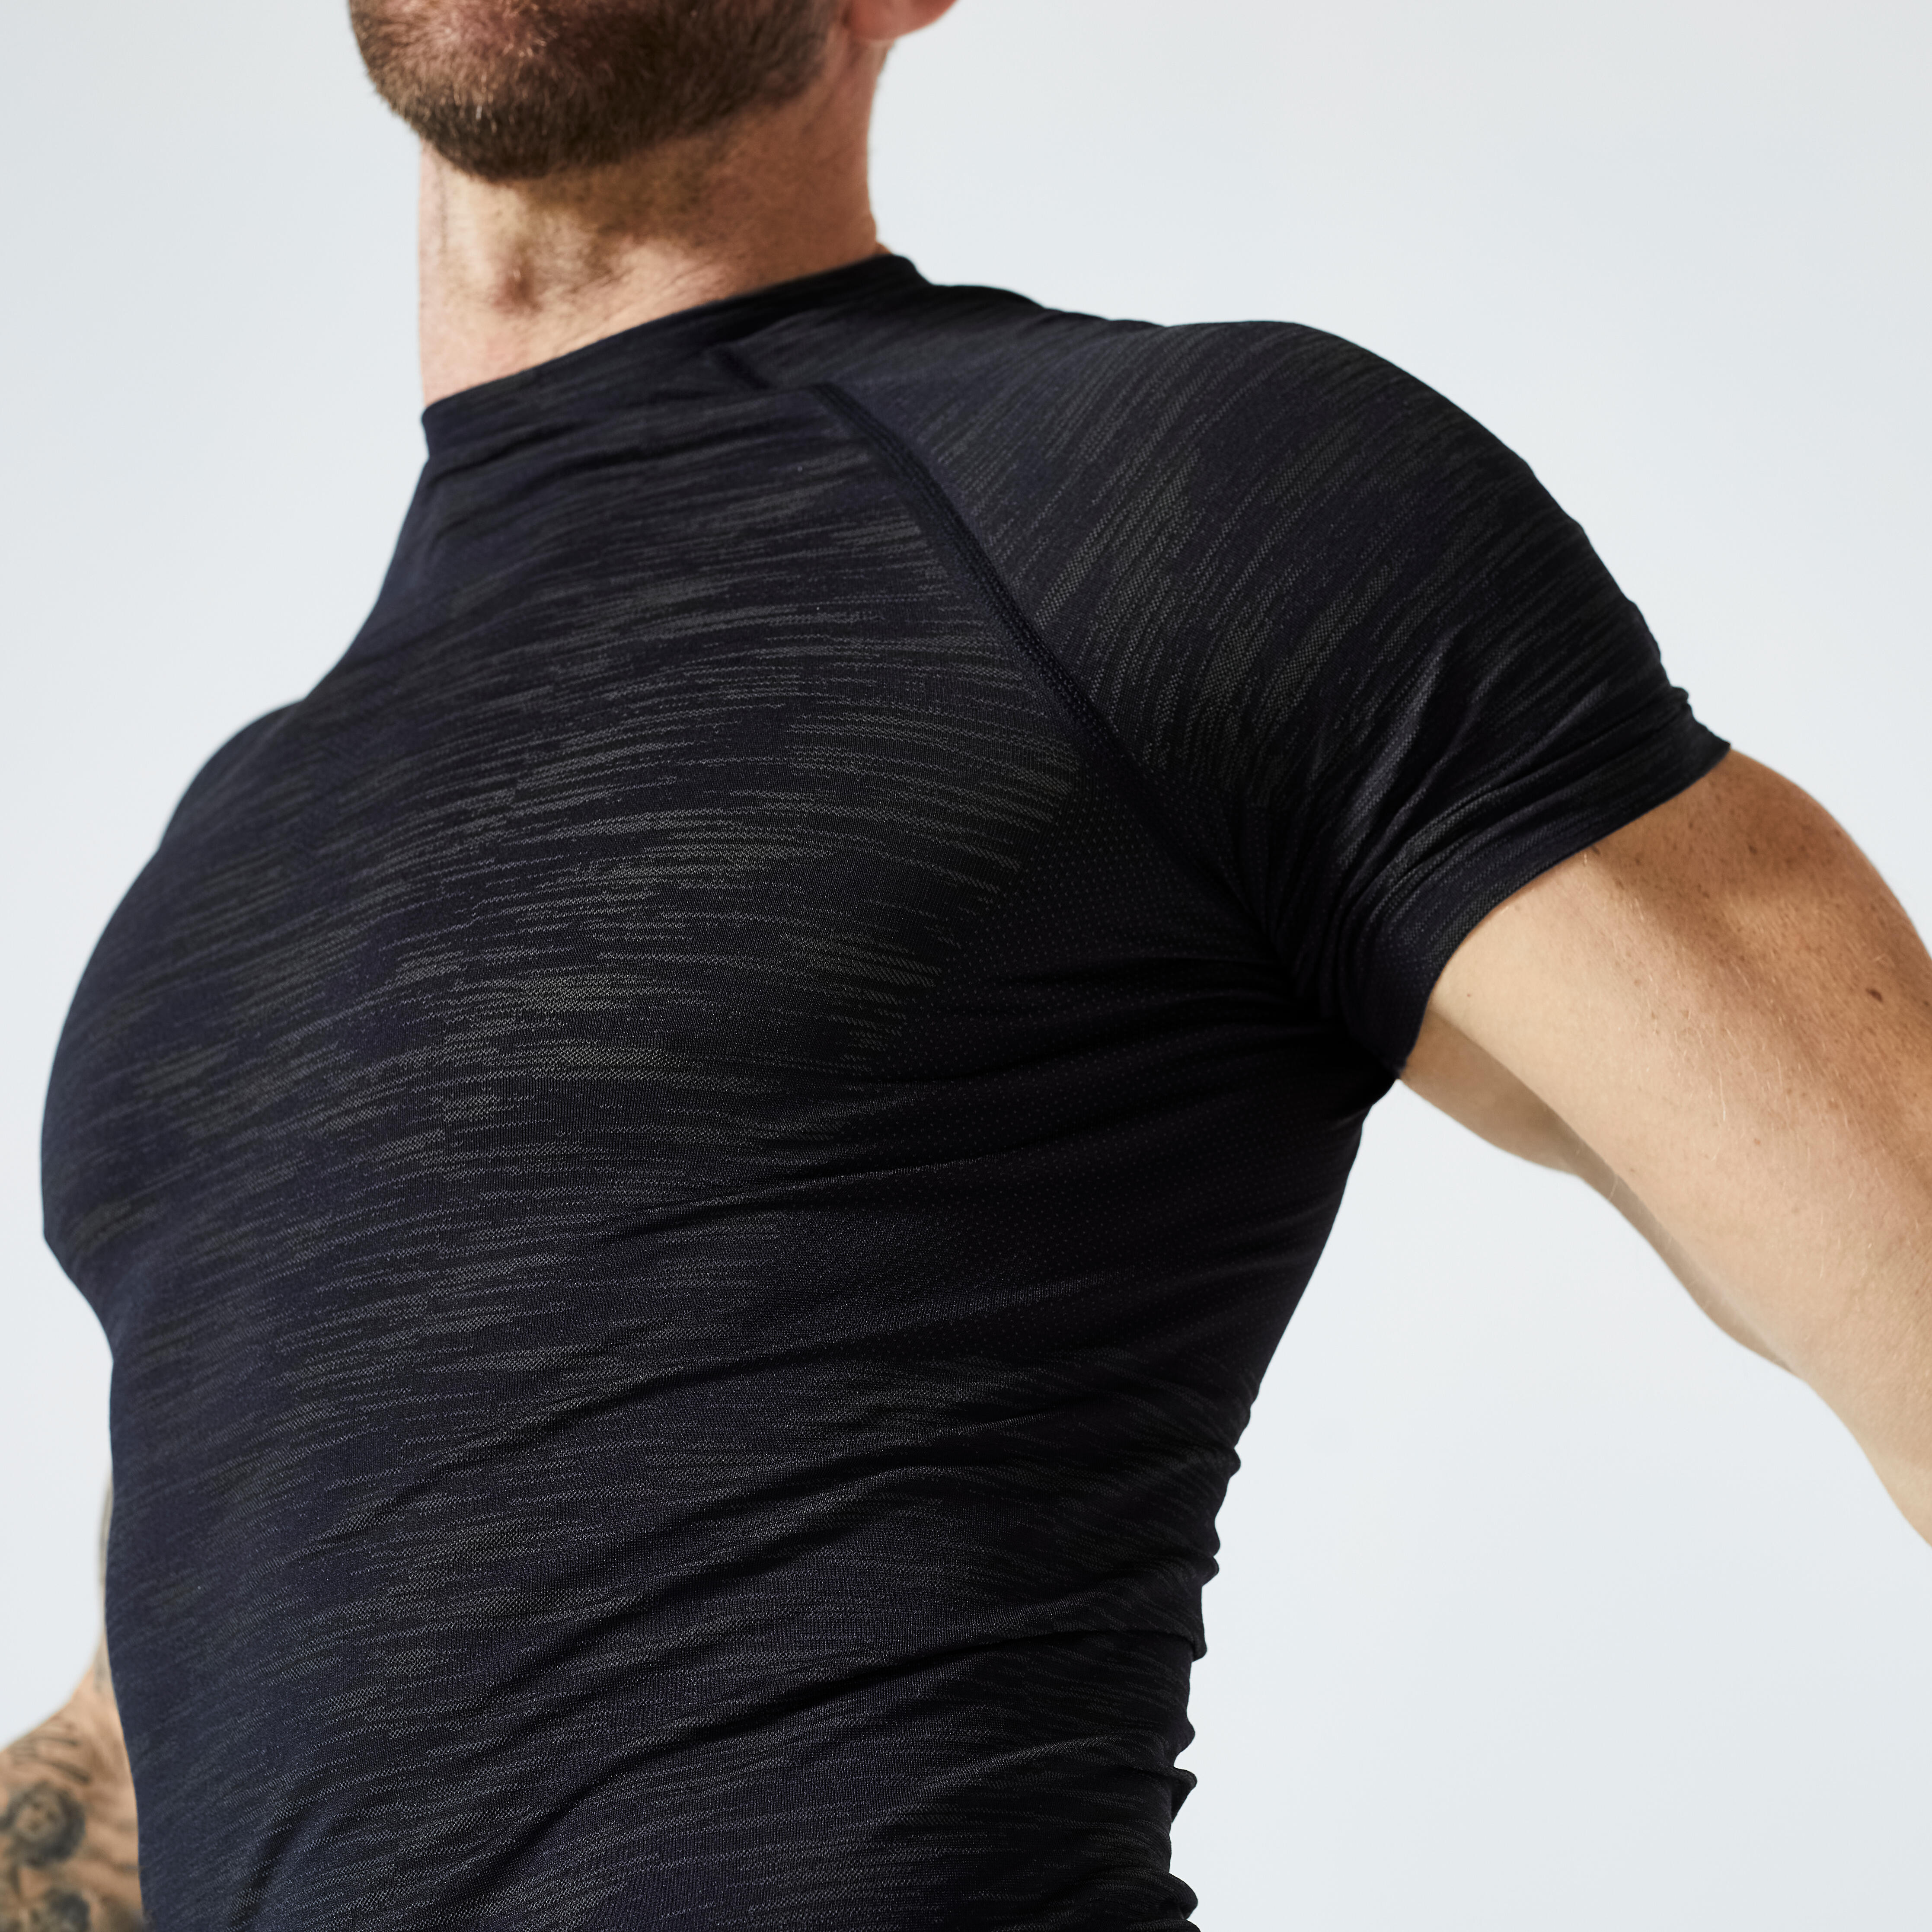 Men's Compression T-Shirt - 500 - Black, Deep khaki - Domyos - Decathlon